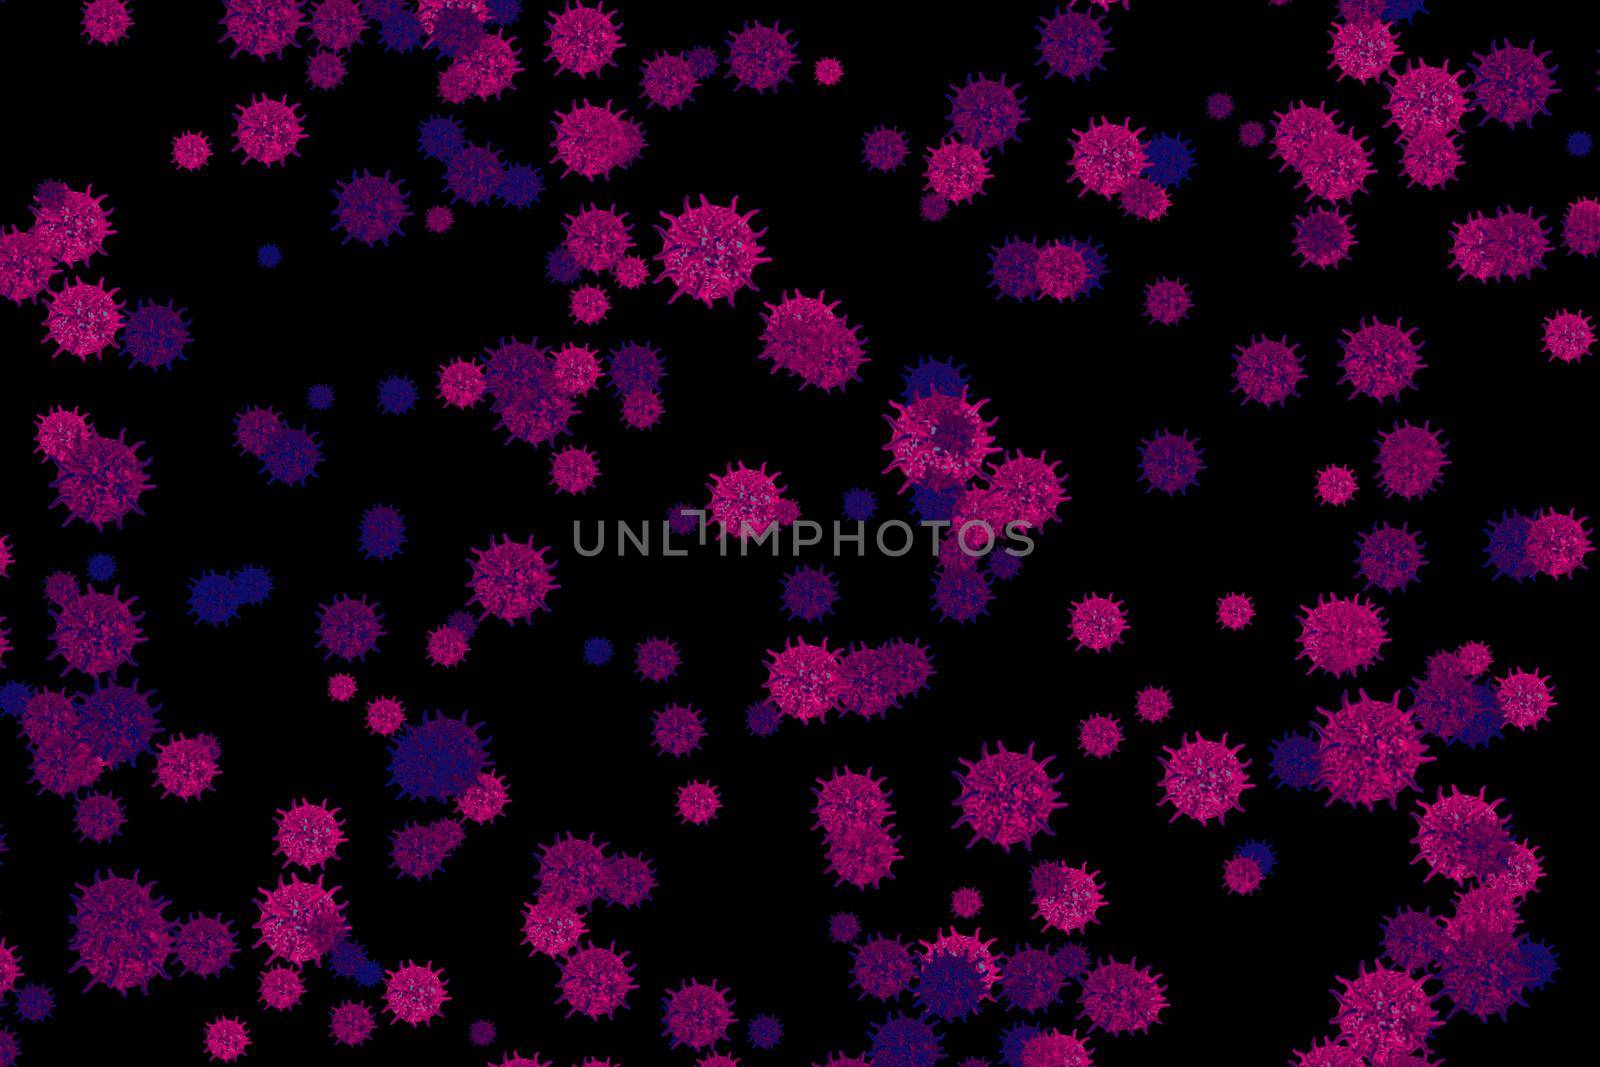 small virus covid 19 ball dark blue magenta was floating in air by Darkfox